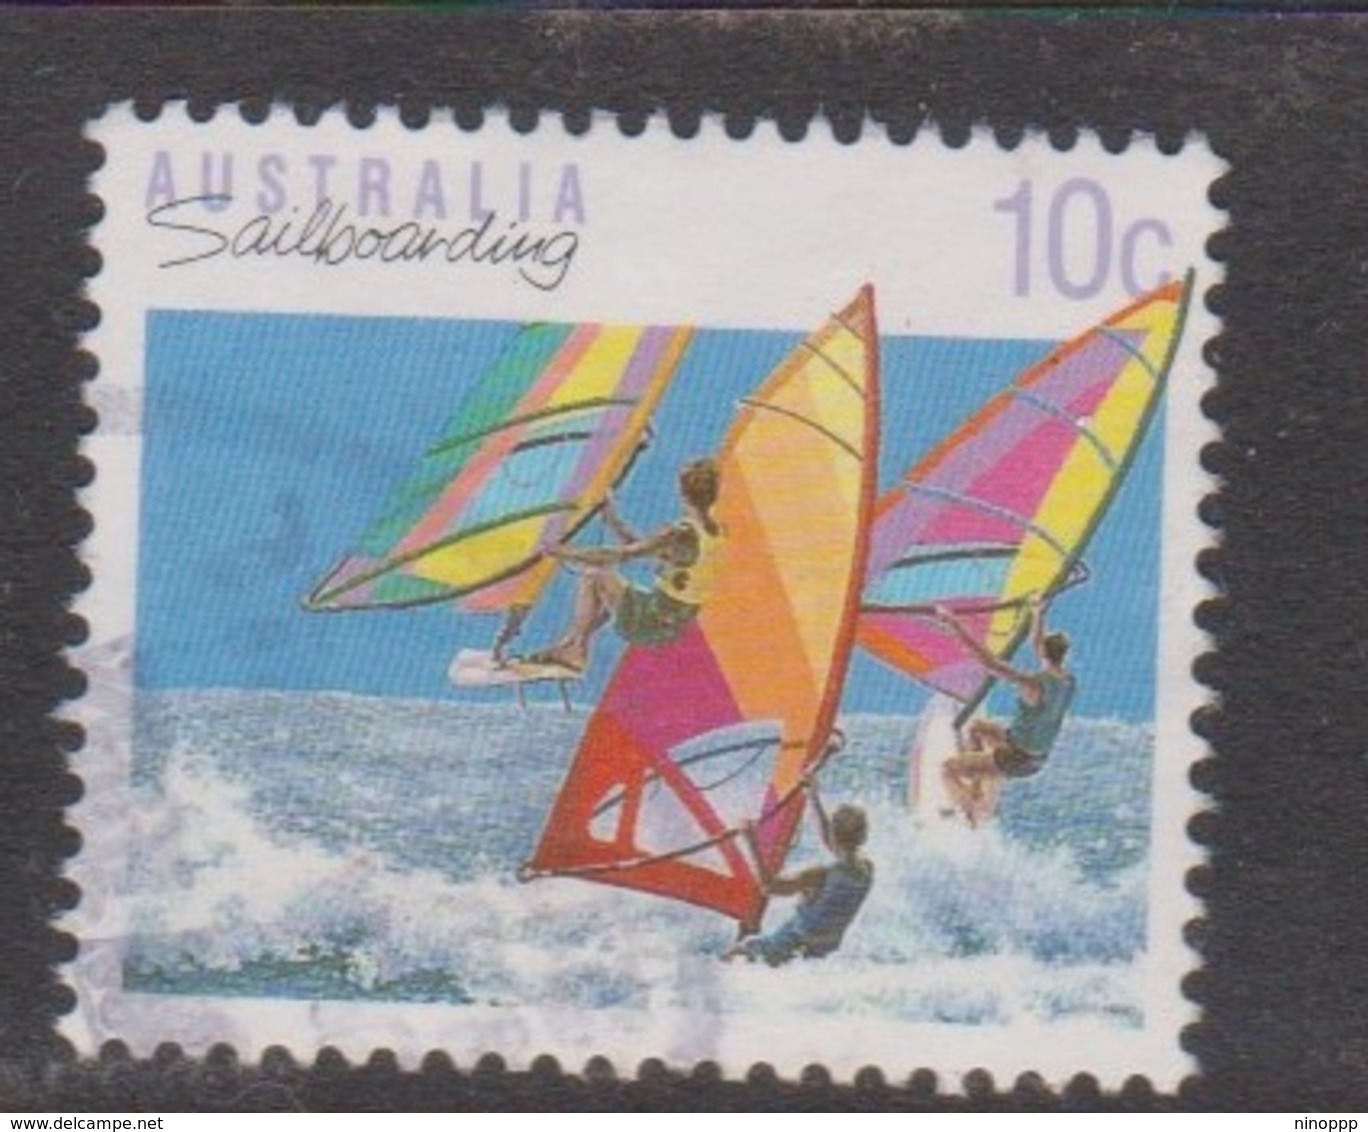 Australia ASC 1228b 1990 Sports 10c Sailboarding Perf 14 X 14.5, Used - Proofs & Reprints